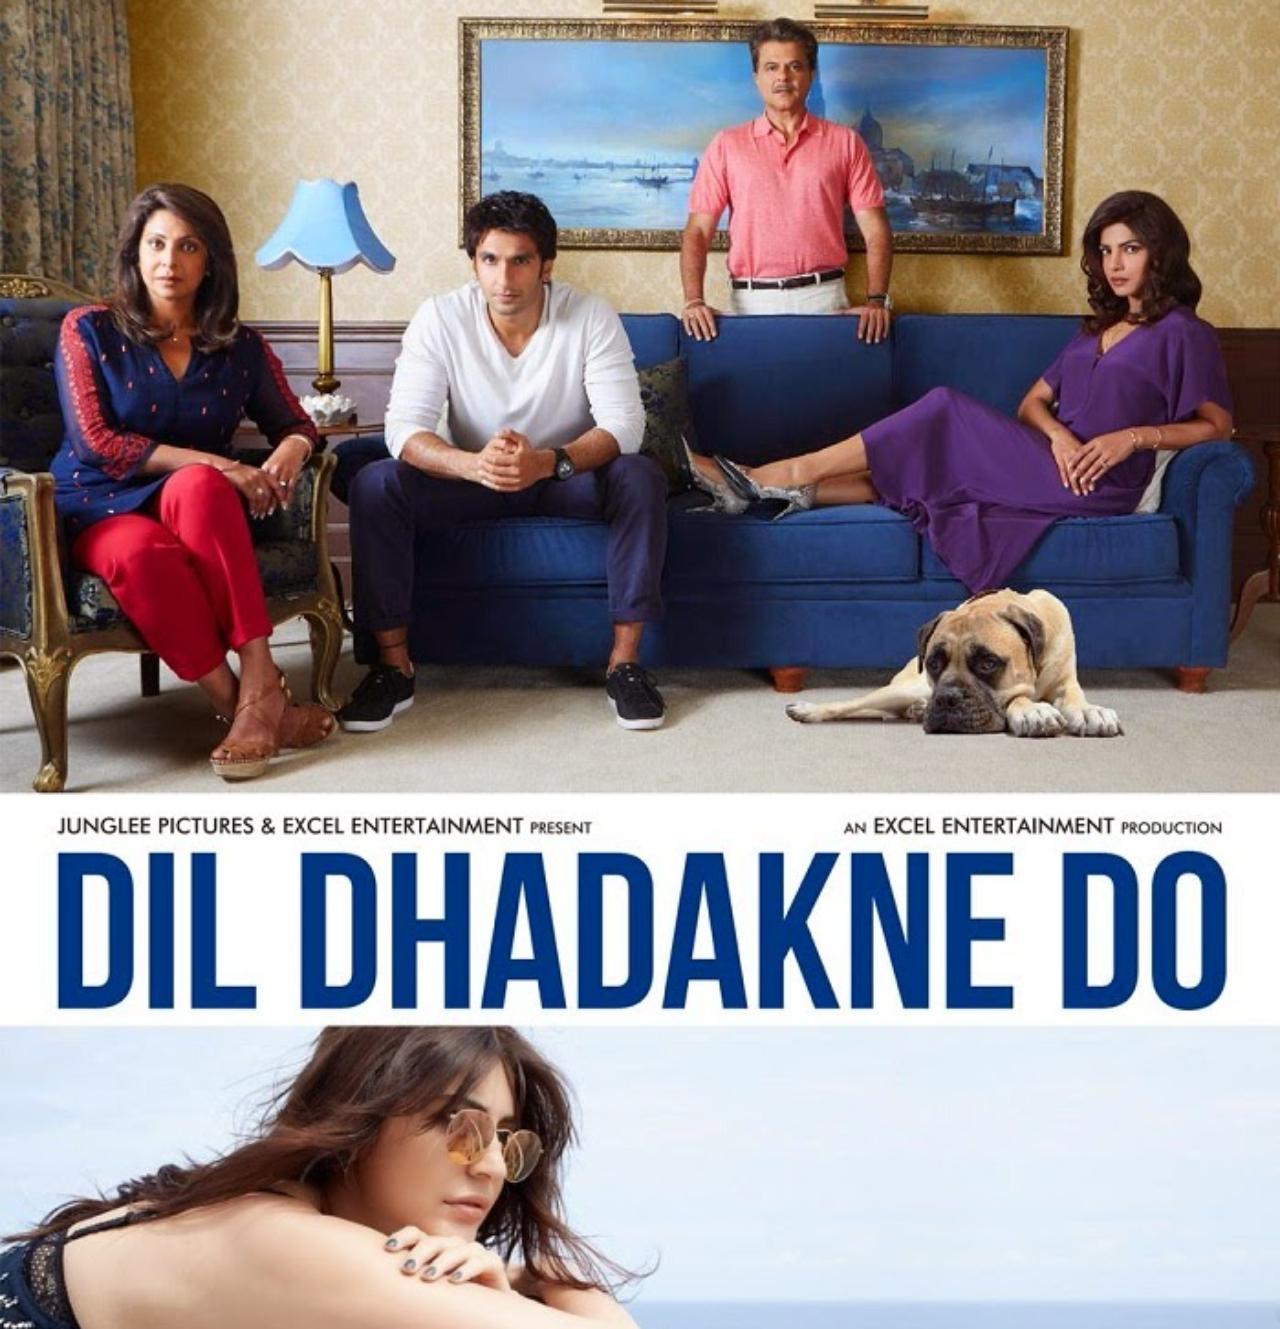 The 2015 multi-starrer 'Dil Dhadakne Do' directed by Zoya Akhtar has a rating of 7. Apart from Priyanka, the film also stars Anil Kapoor, Shefali Shah, Anushka Sharma, Ranveer Singh, Farhan Akhtar, and Rahul Bose